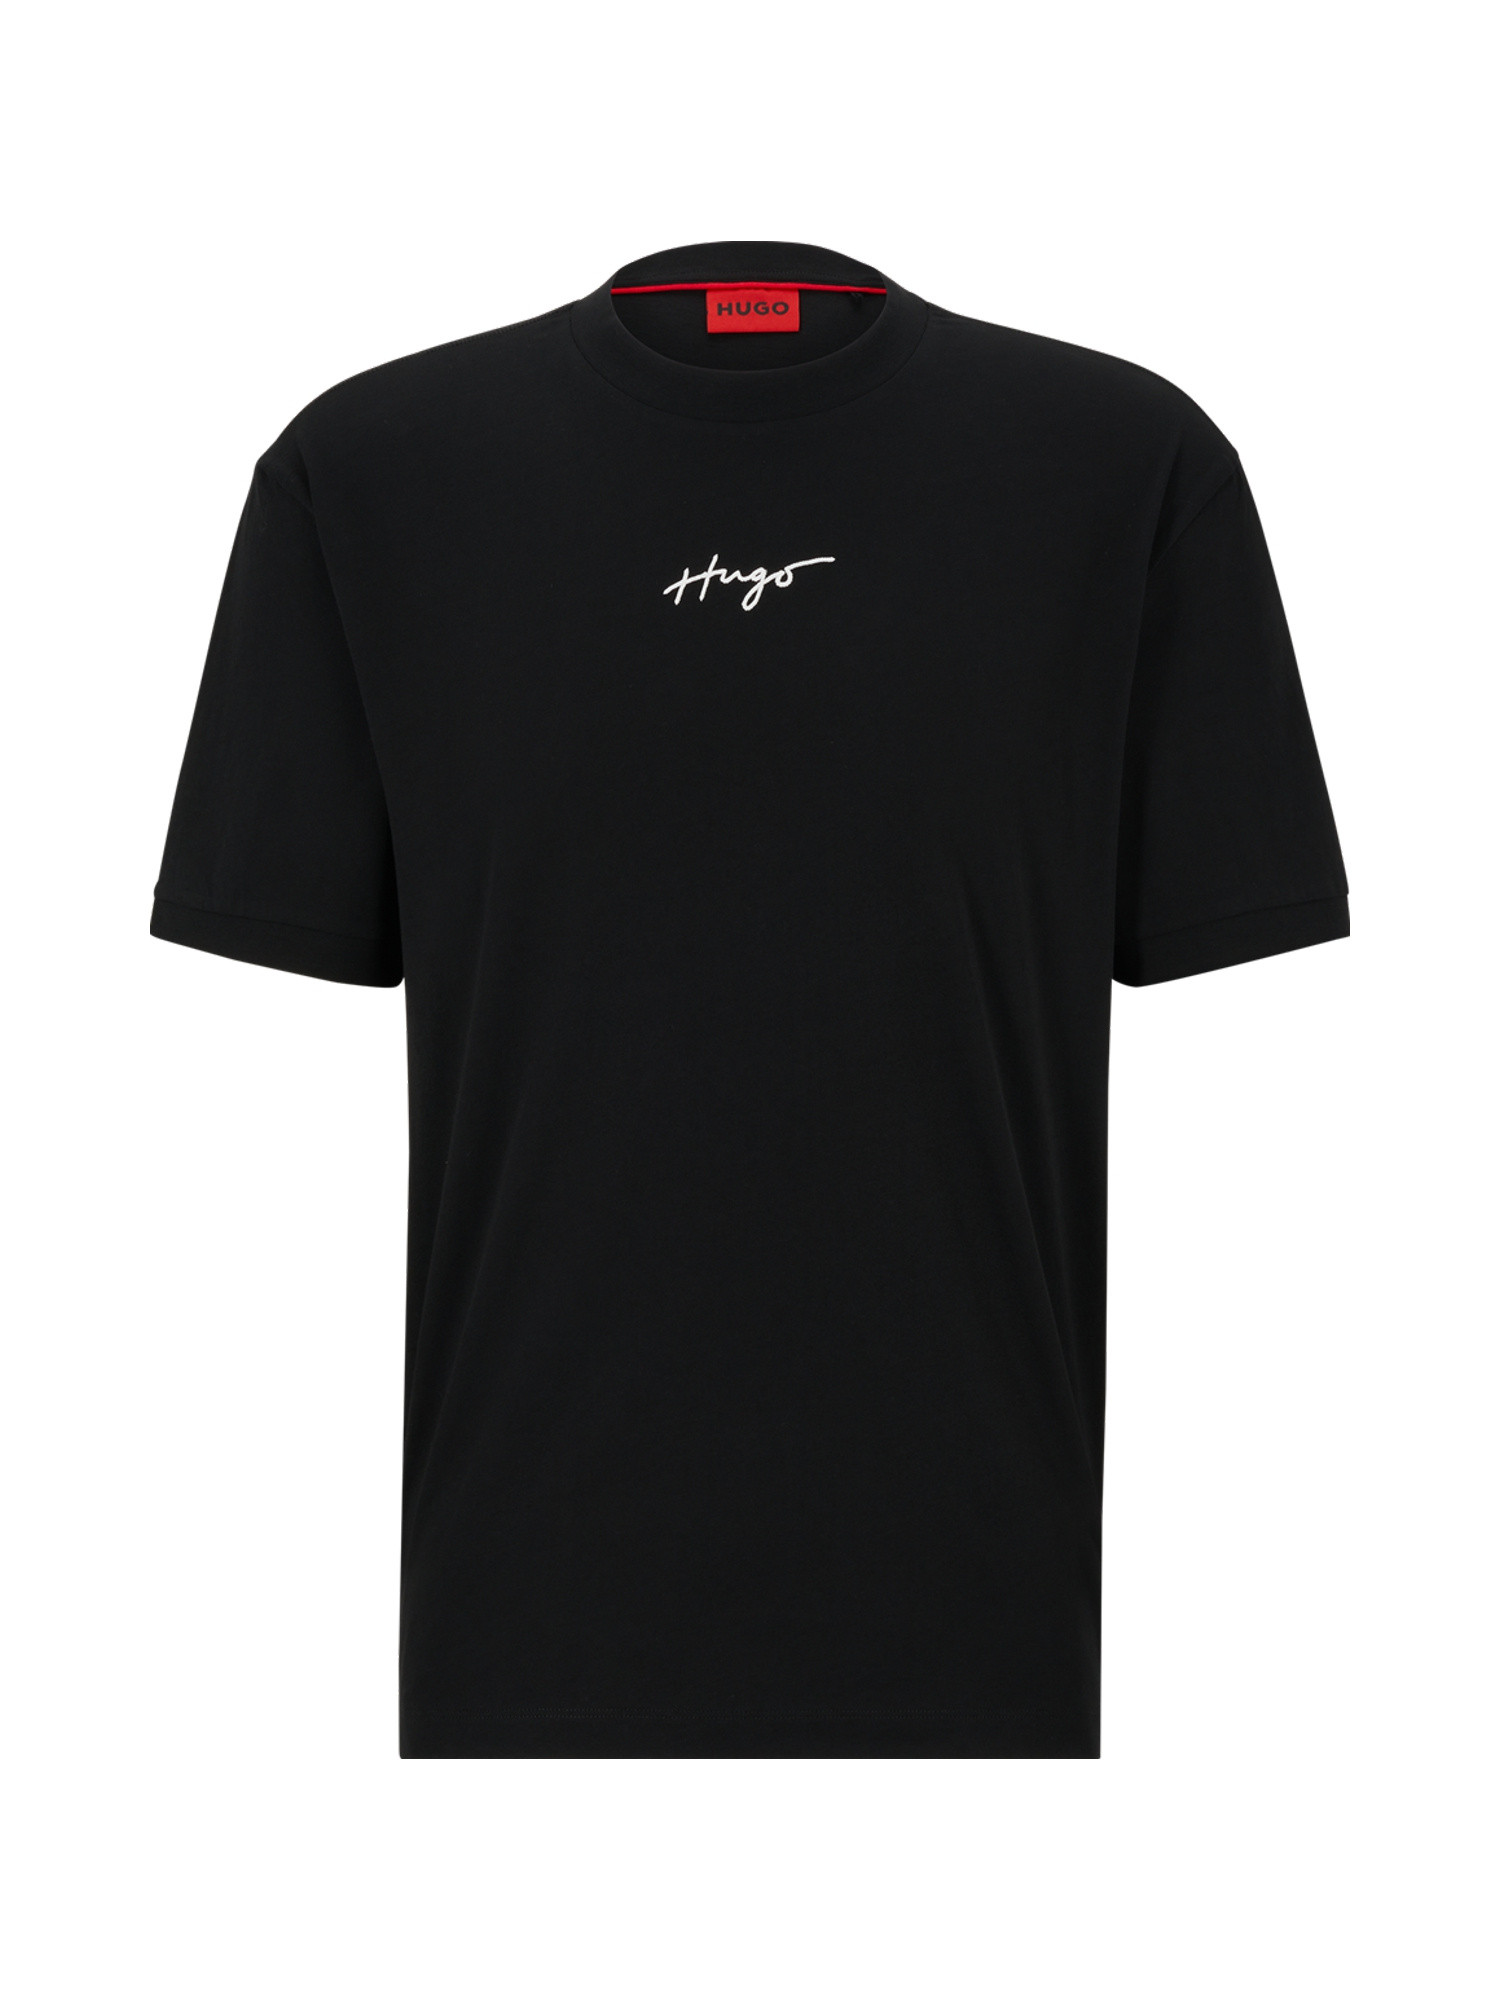 Hugo - T-shirt con logo ricamato in cotone, Nero, large image number 0